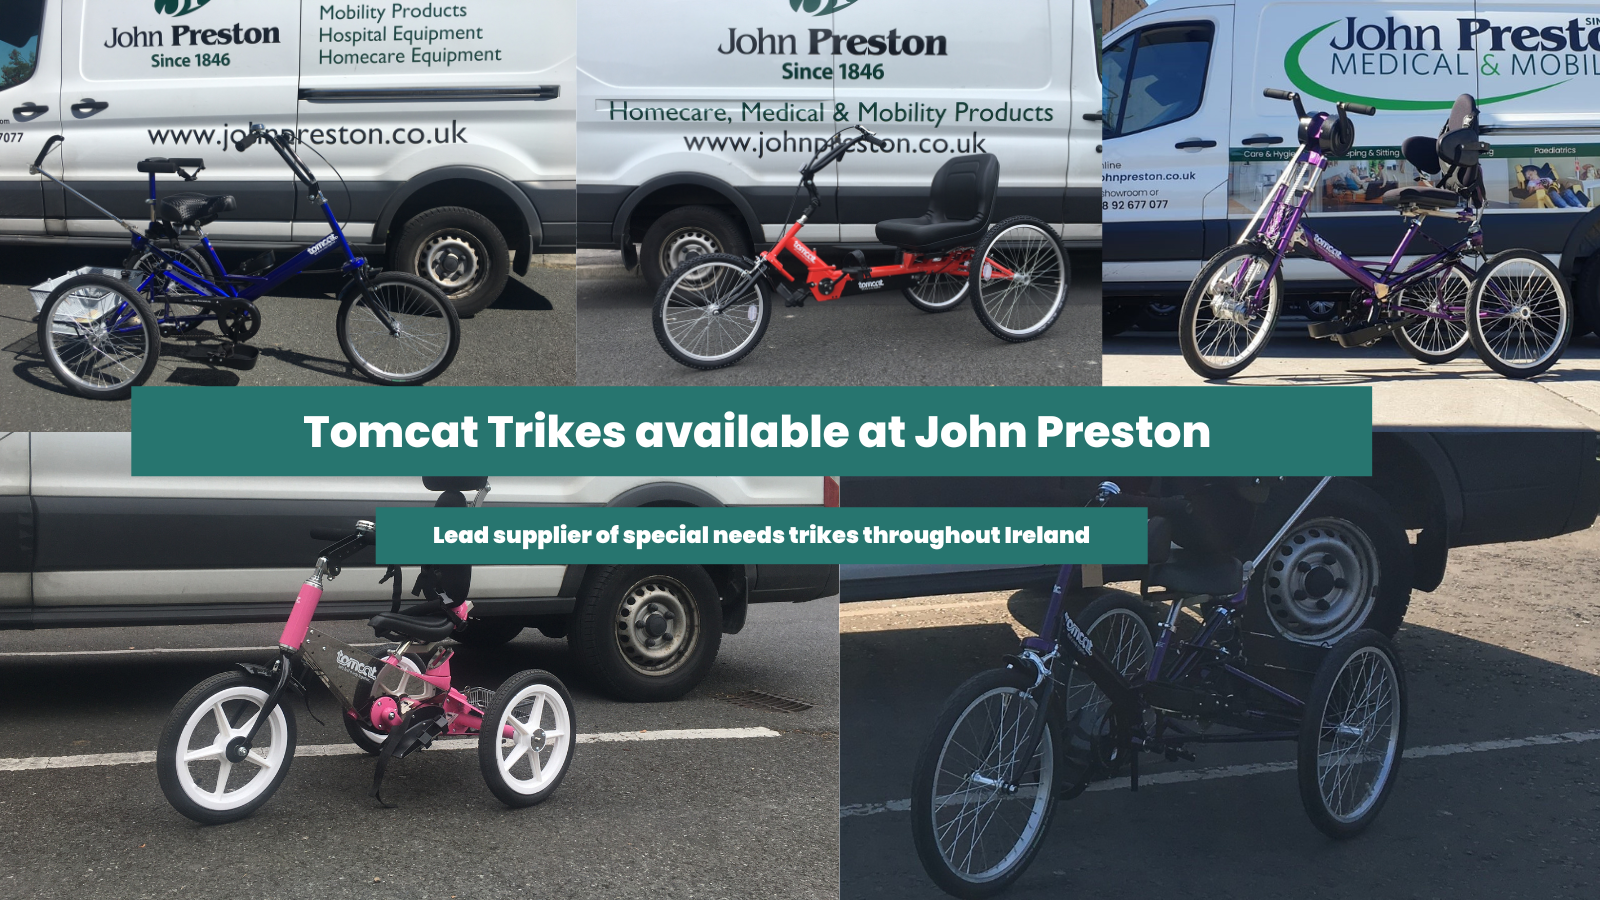 Tomcat Trikes available throughout Ireland at John Preston Healthcare